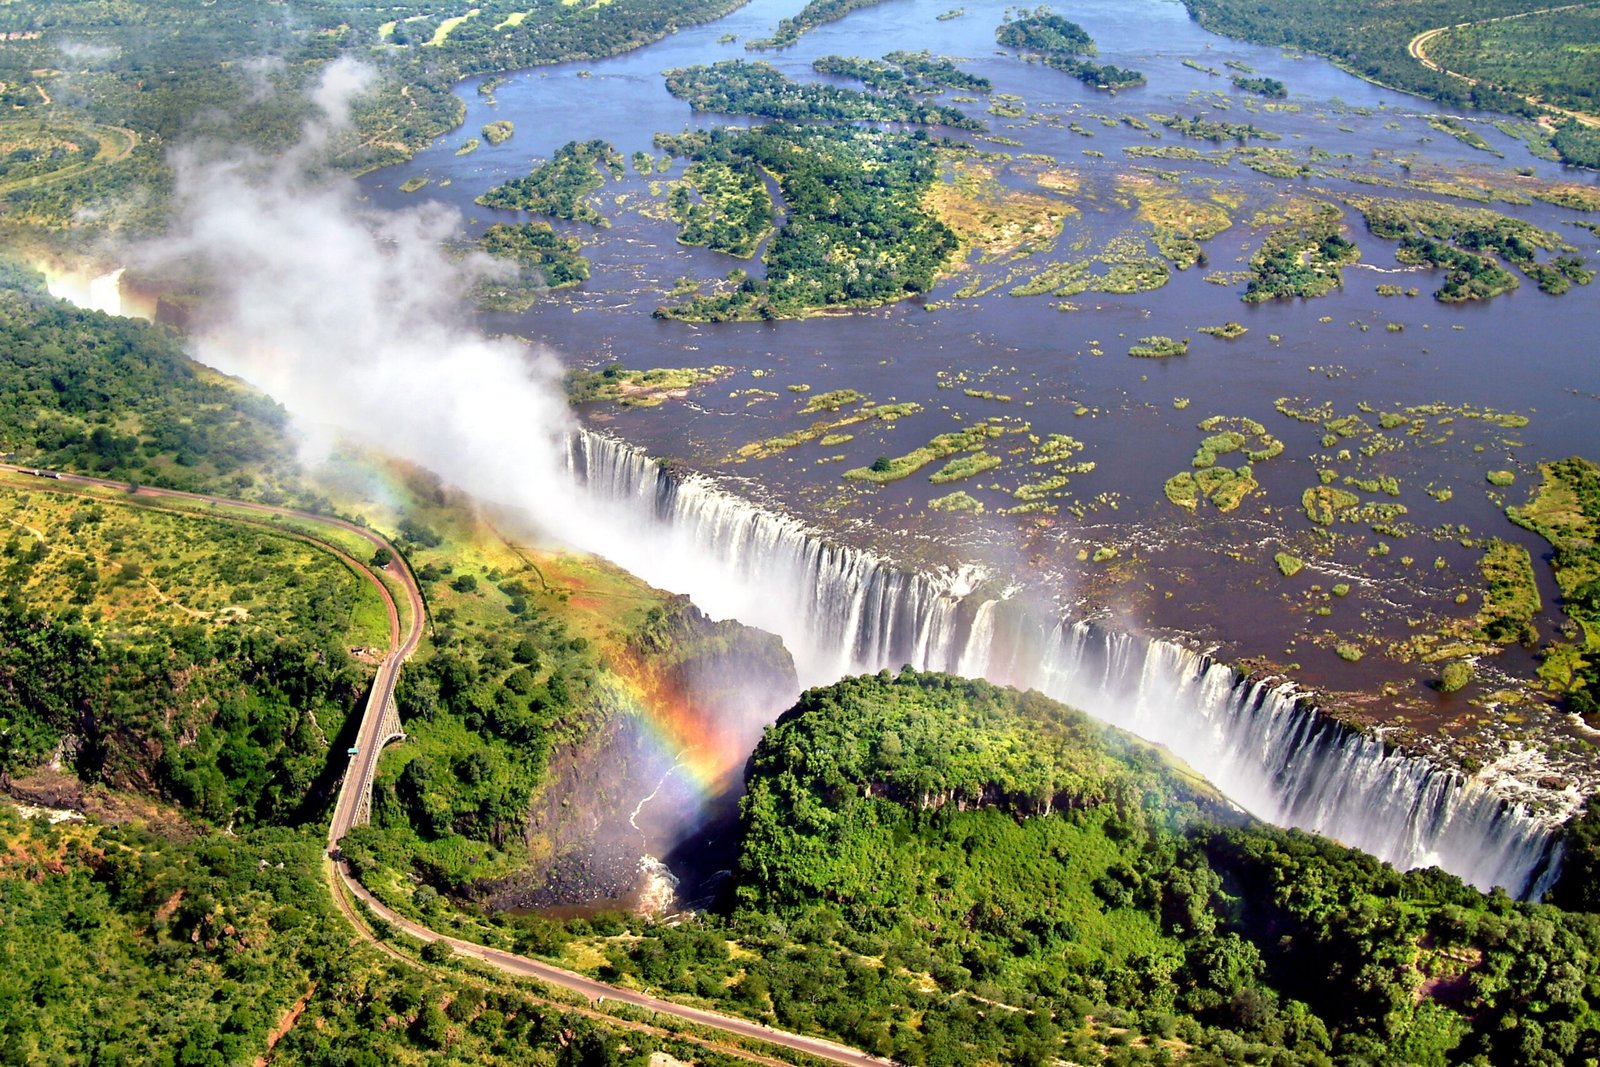 Victoria Falls located in Africa